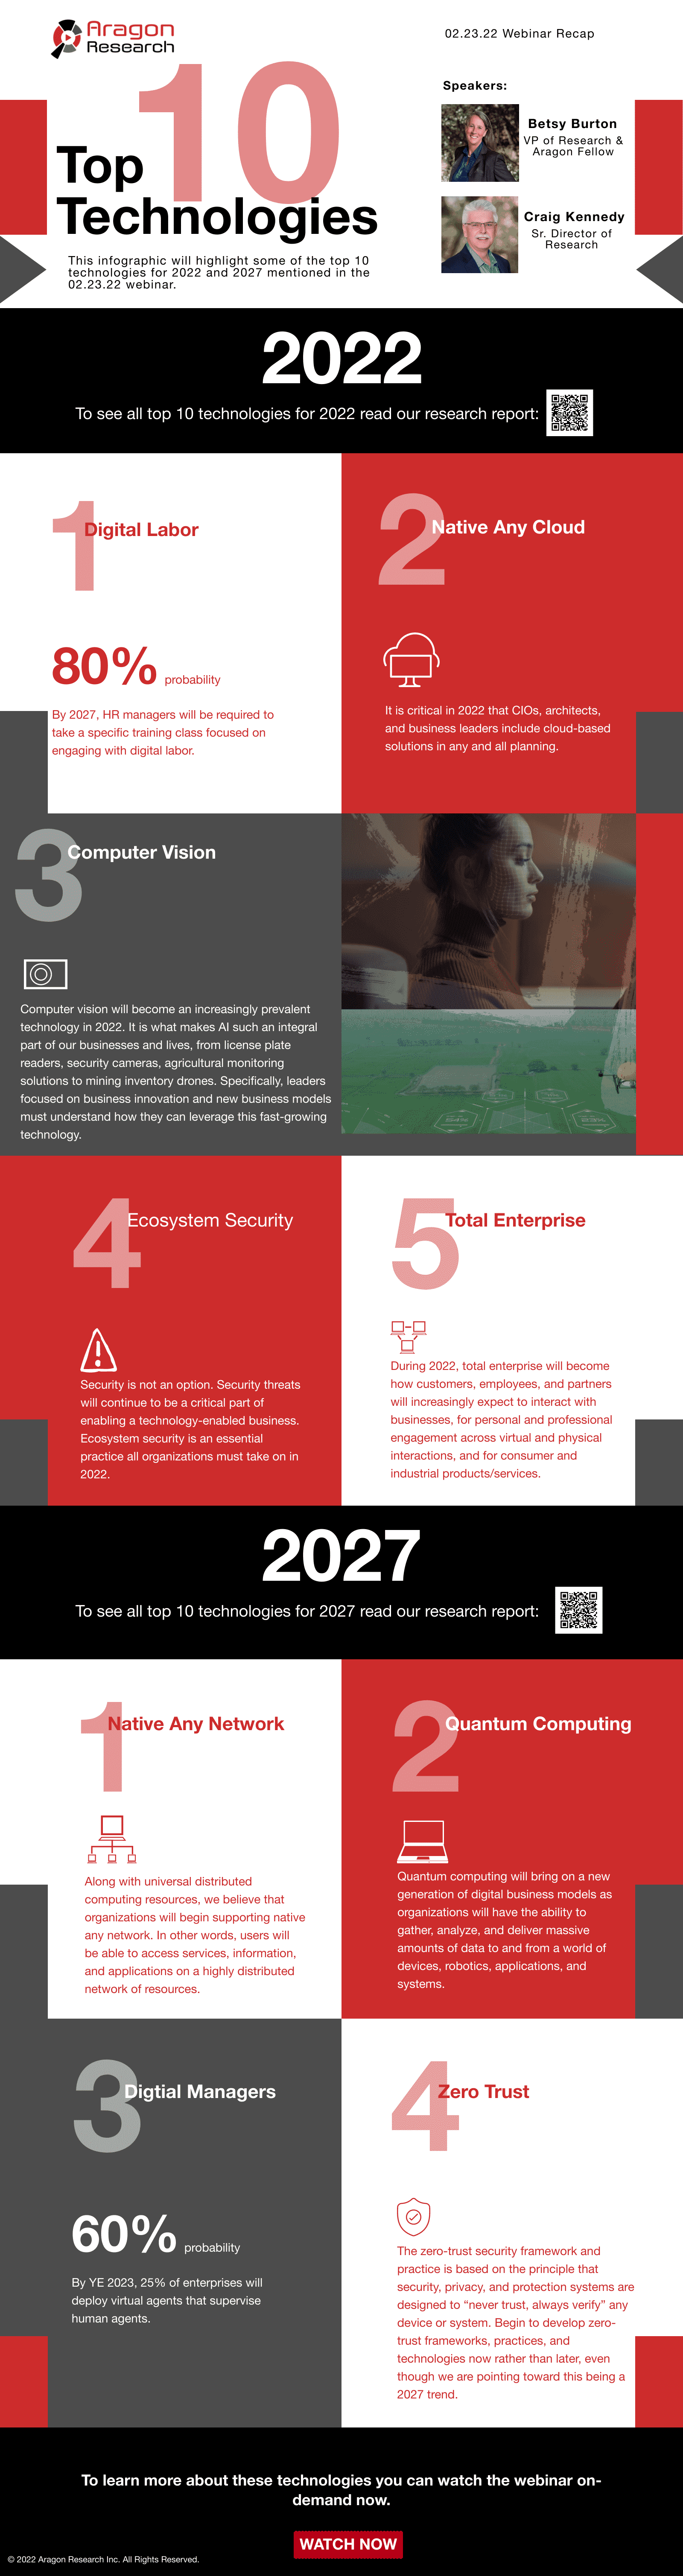 02 23 22 webina 57853807 - [Infographic] Top 10 Technologies 2022 & 2027